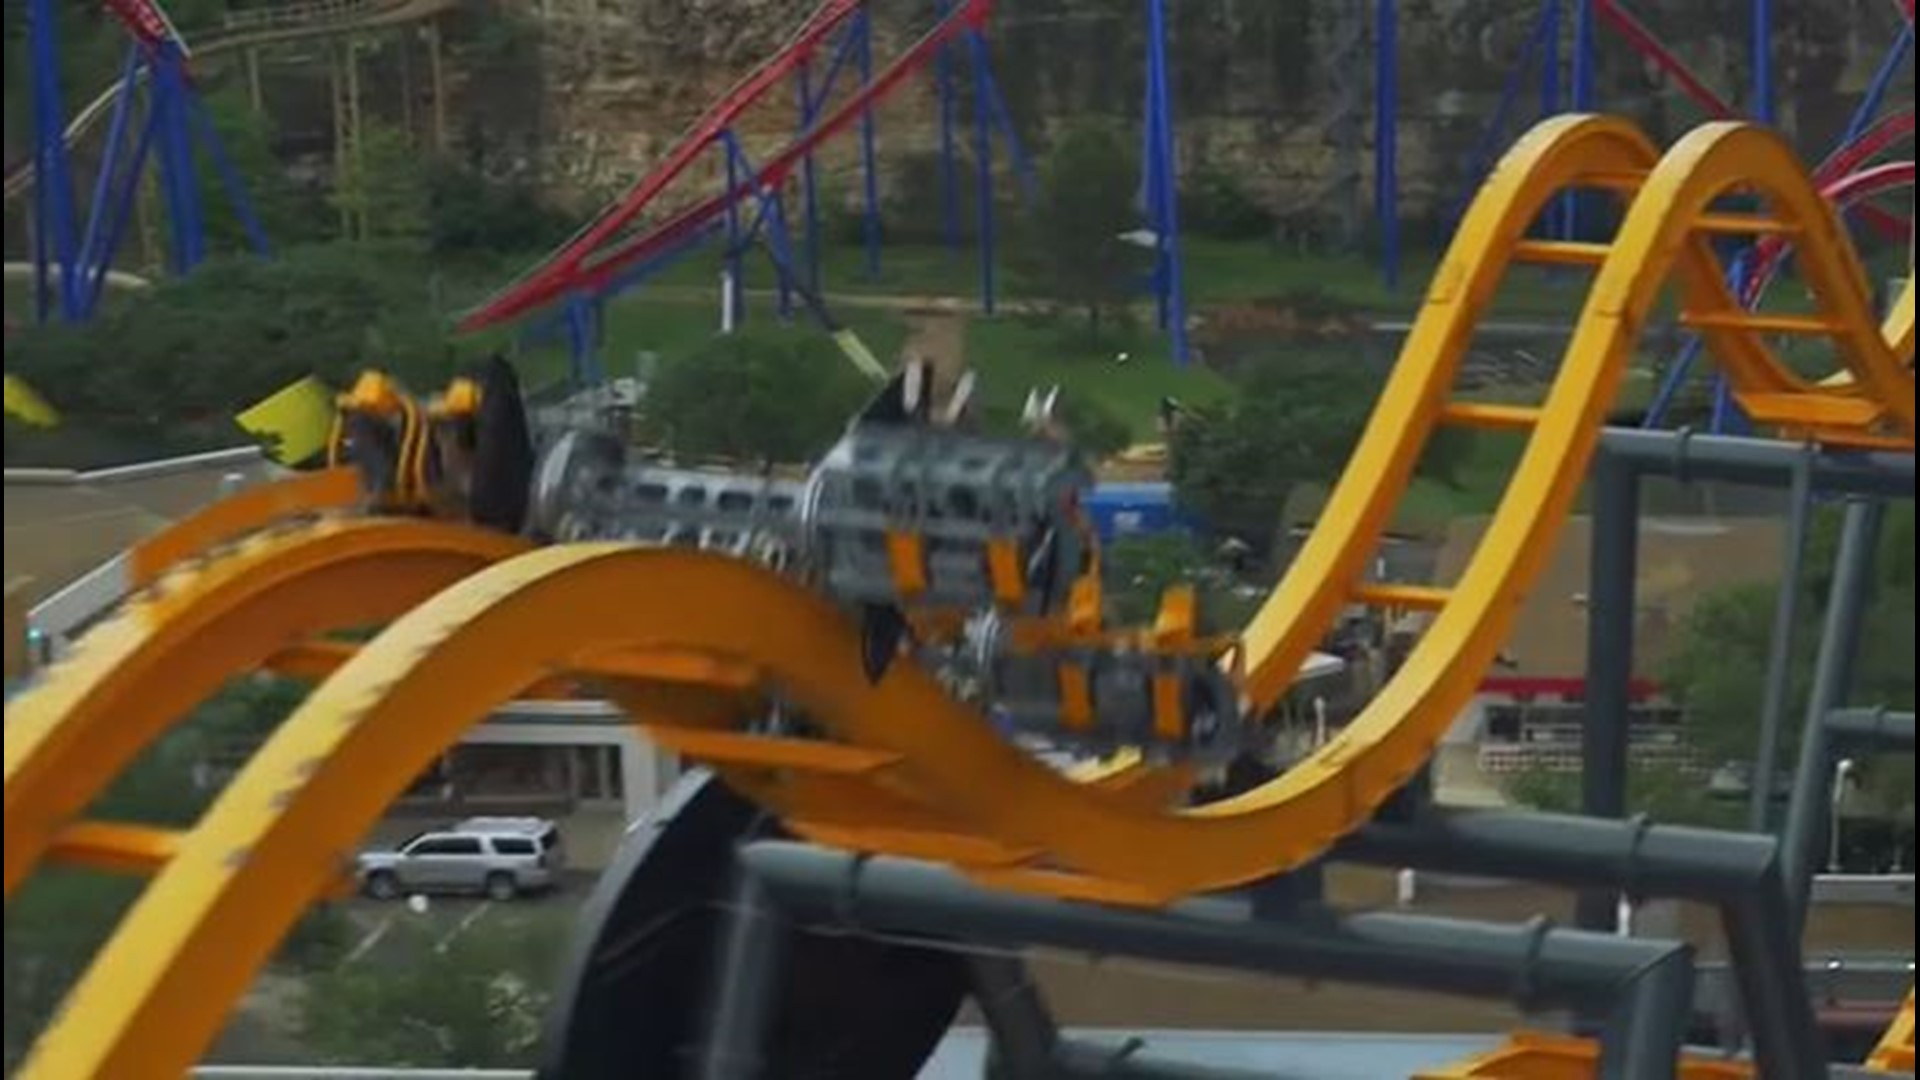 Adventureland posts sneak peak video of new roller coaster